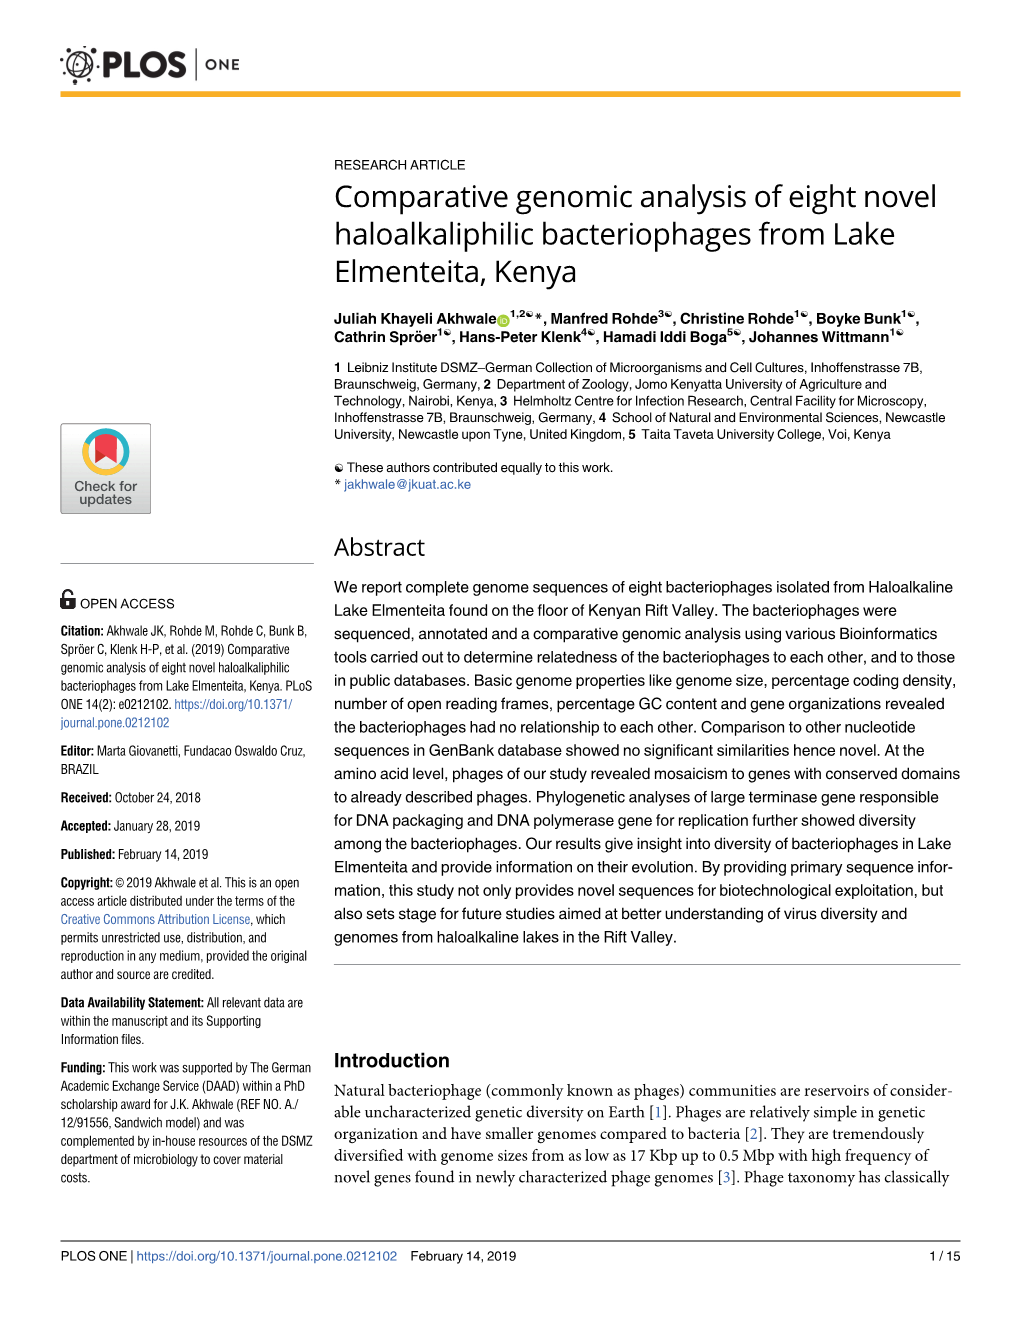 Comparative Genomic Analysis of Eight Novel Haloalkaliphilic Bacteriophages from Lake Elmenteita, Kenya